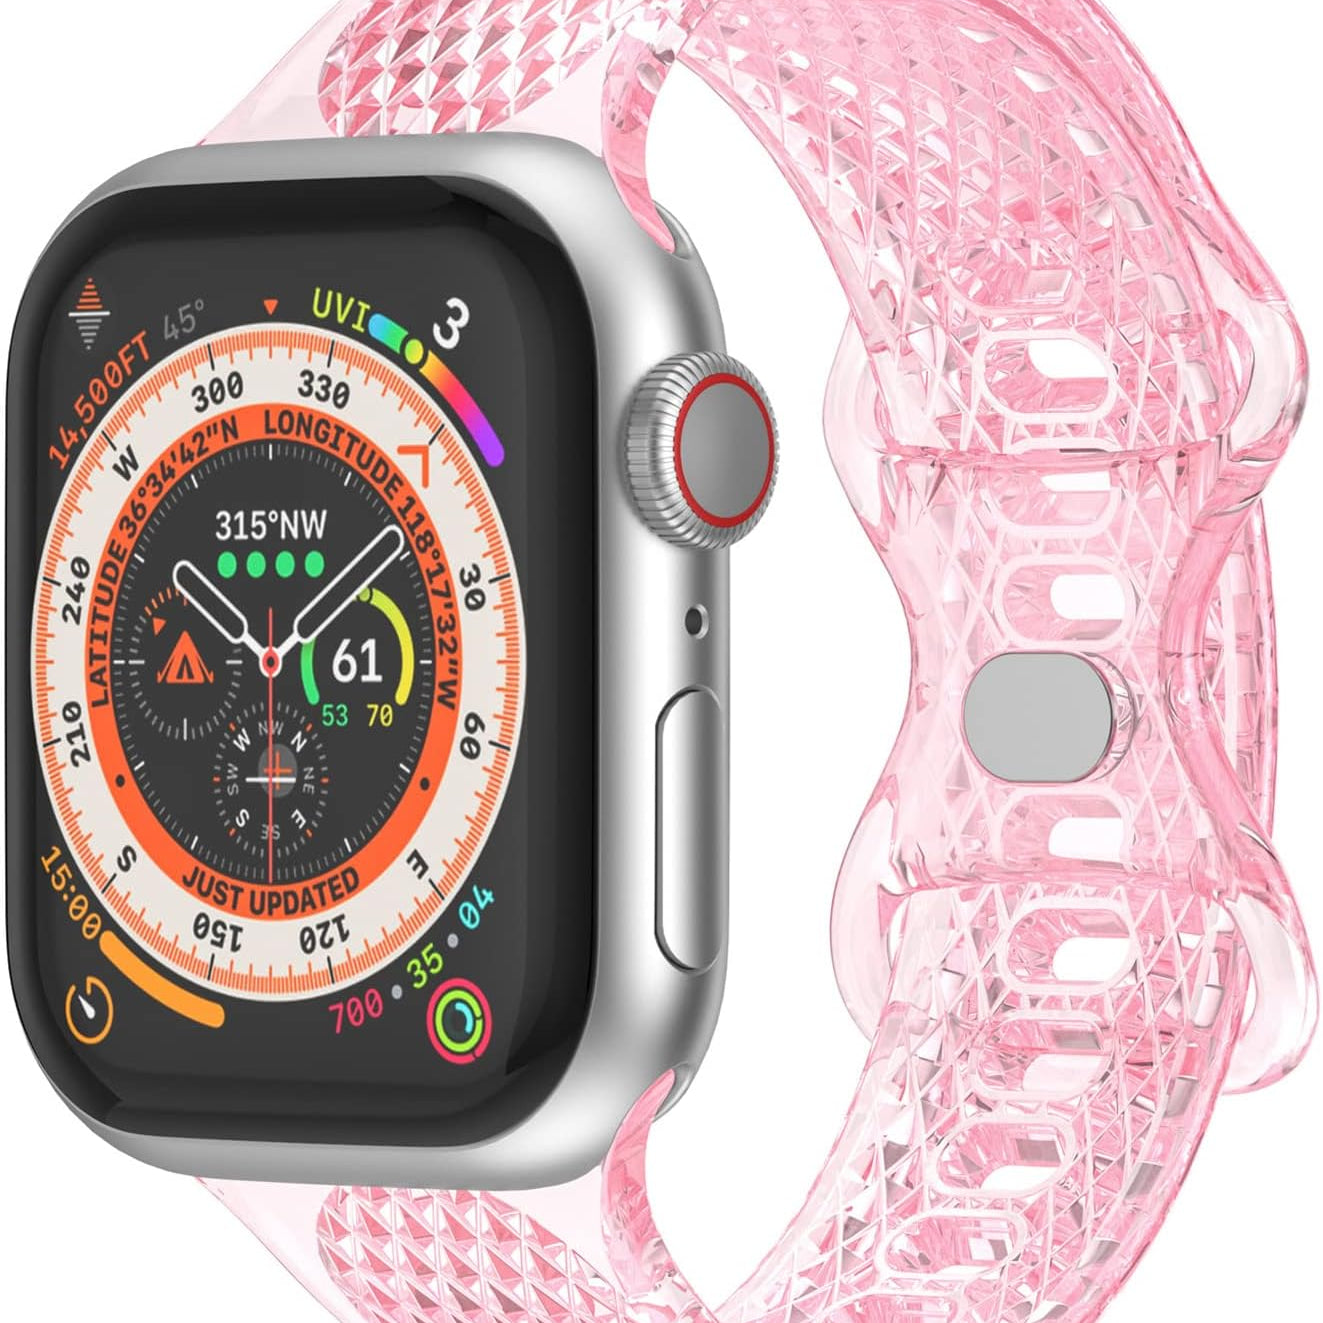 Correa deportiva de silicona ClearGlide JellyGroove para Apple Watch, varios colores disponibles